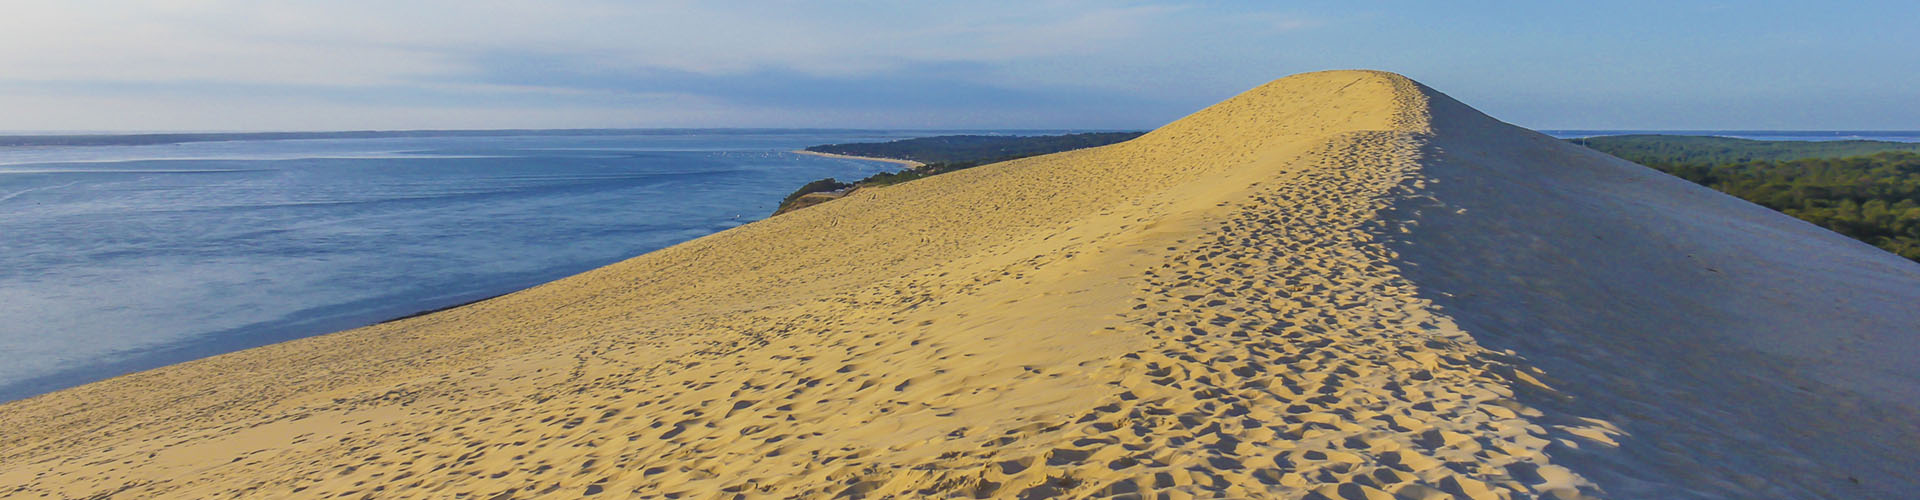 The Dune du Pilat on the Bay of Arcachon